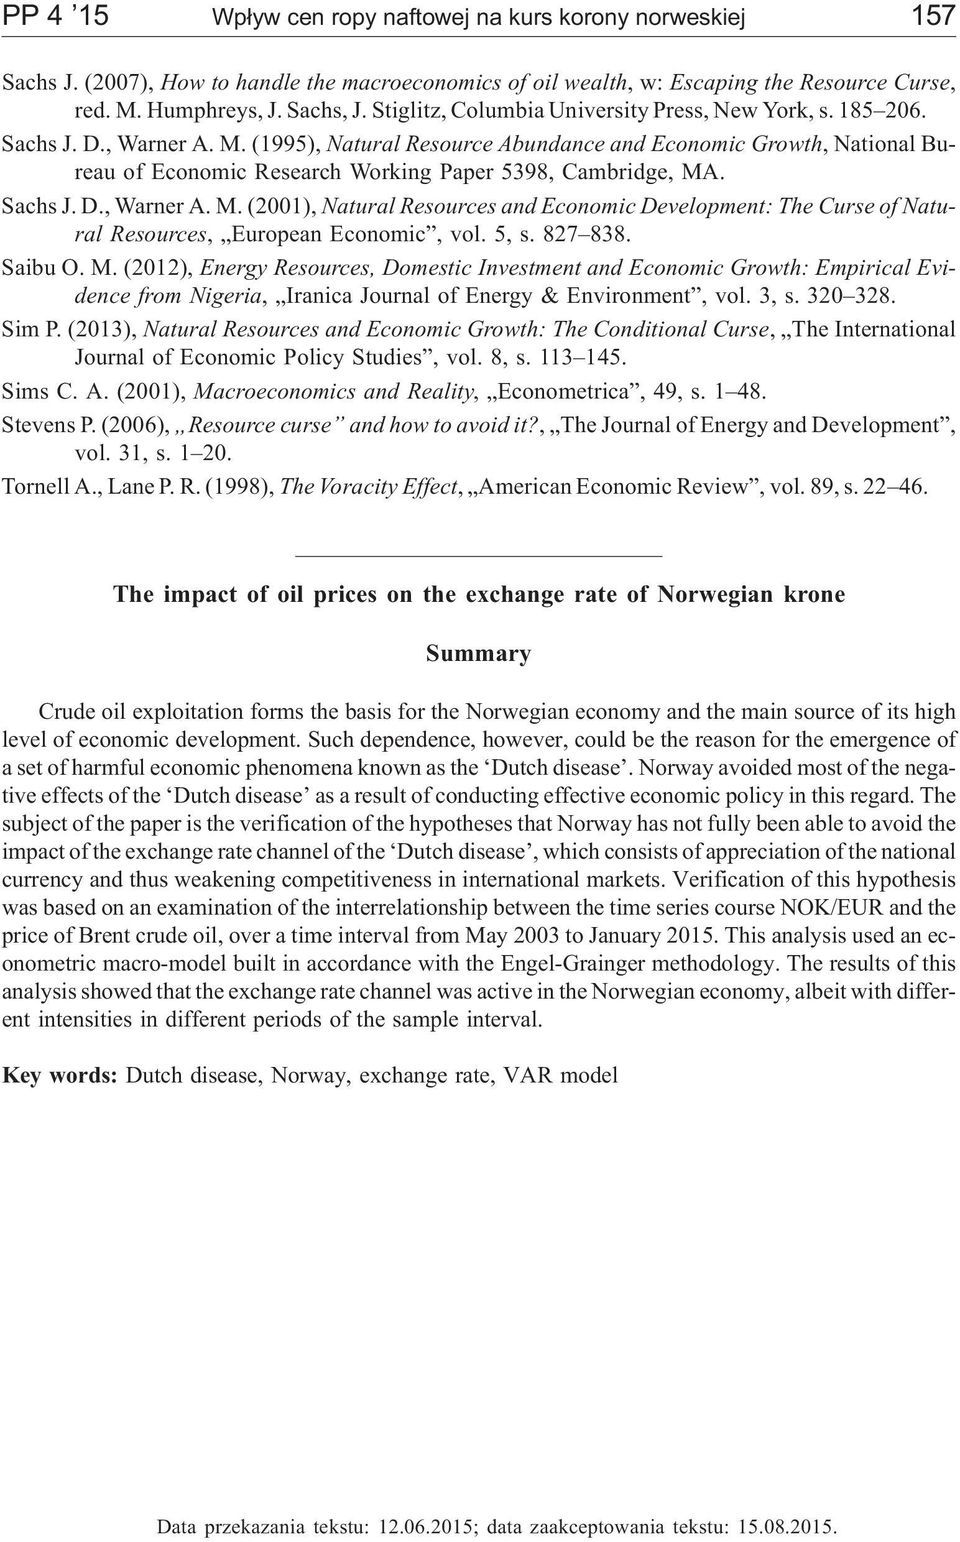 (1995), Natural Resource Abundance and Economic Growth, National Bureau of Economic Research Working Paper 5398, Cambridge, MA